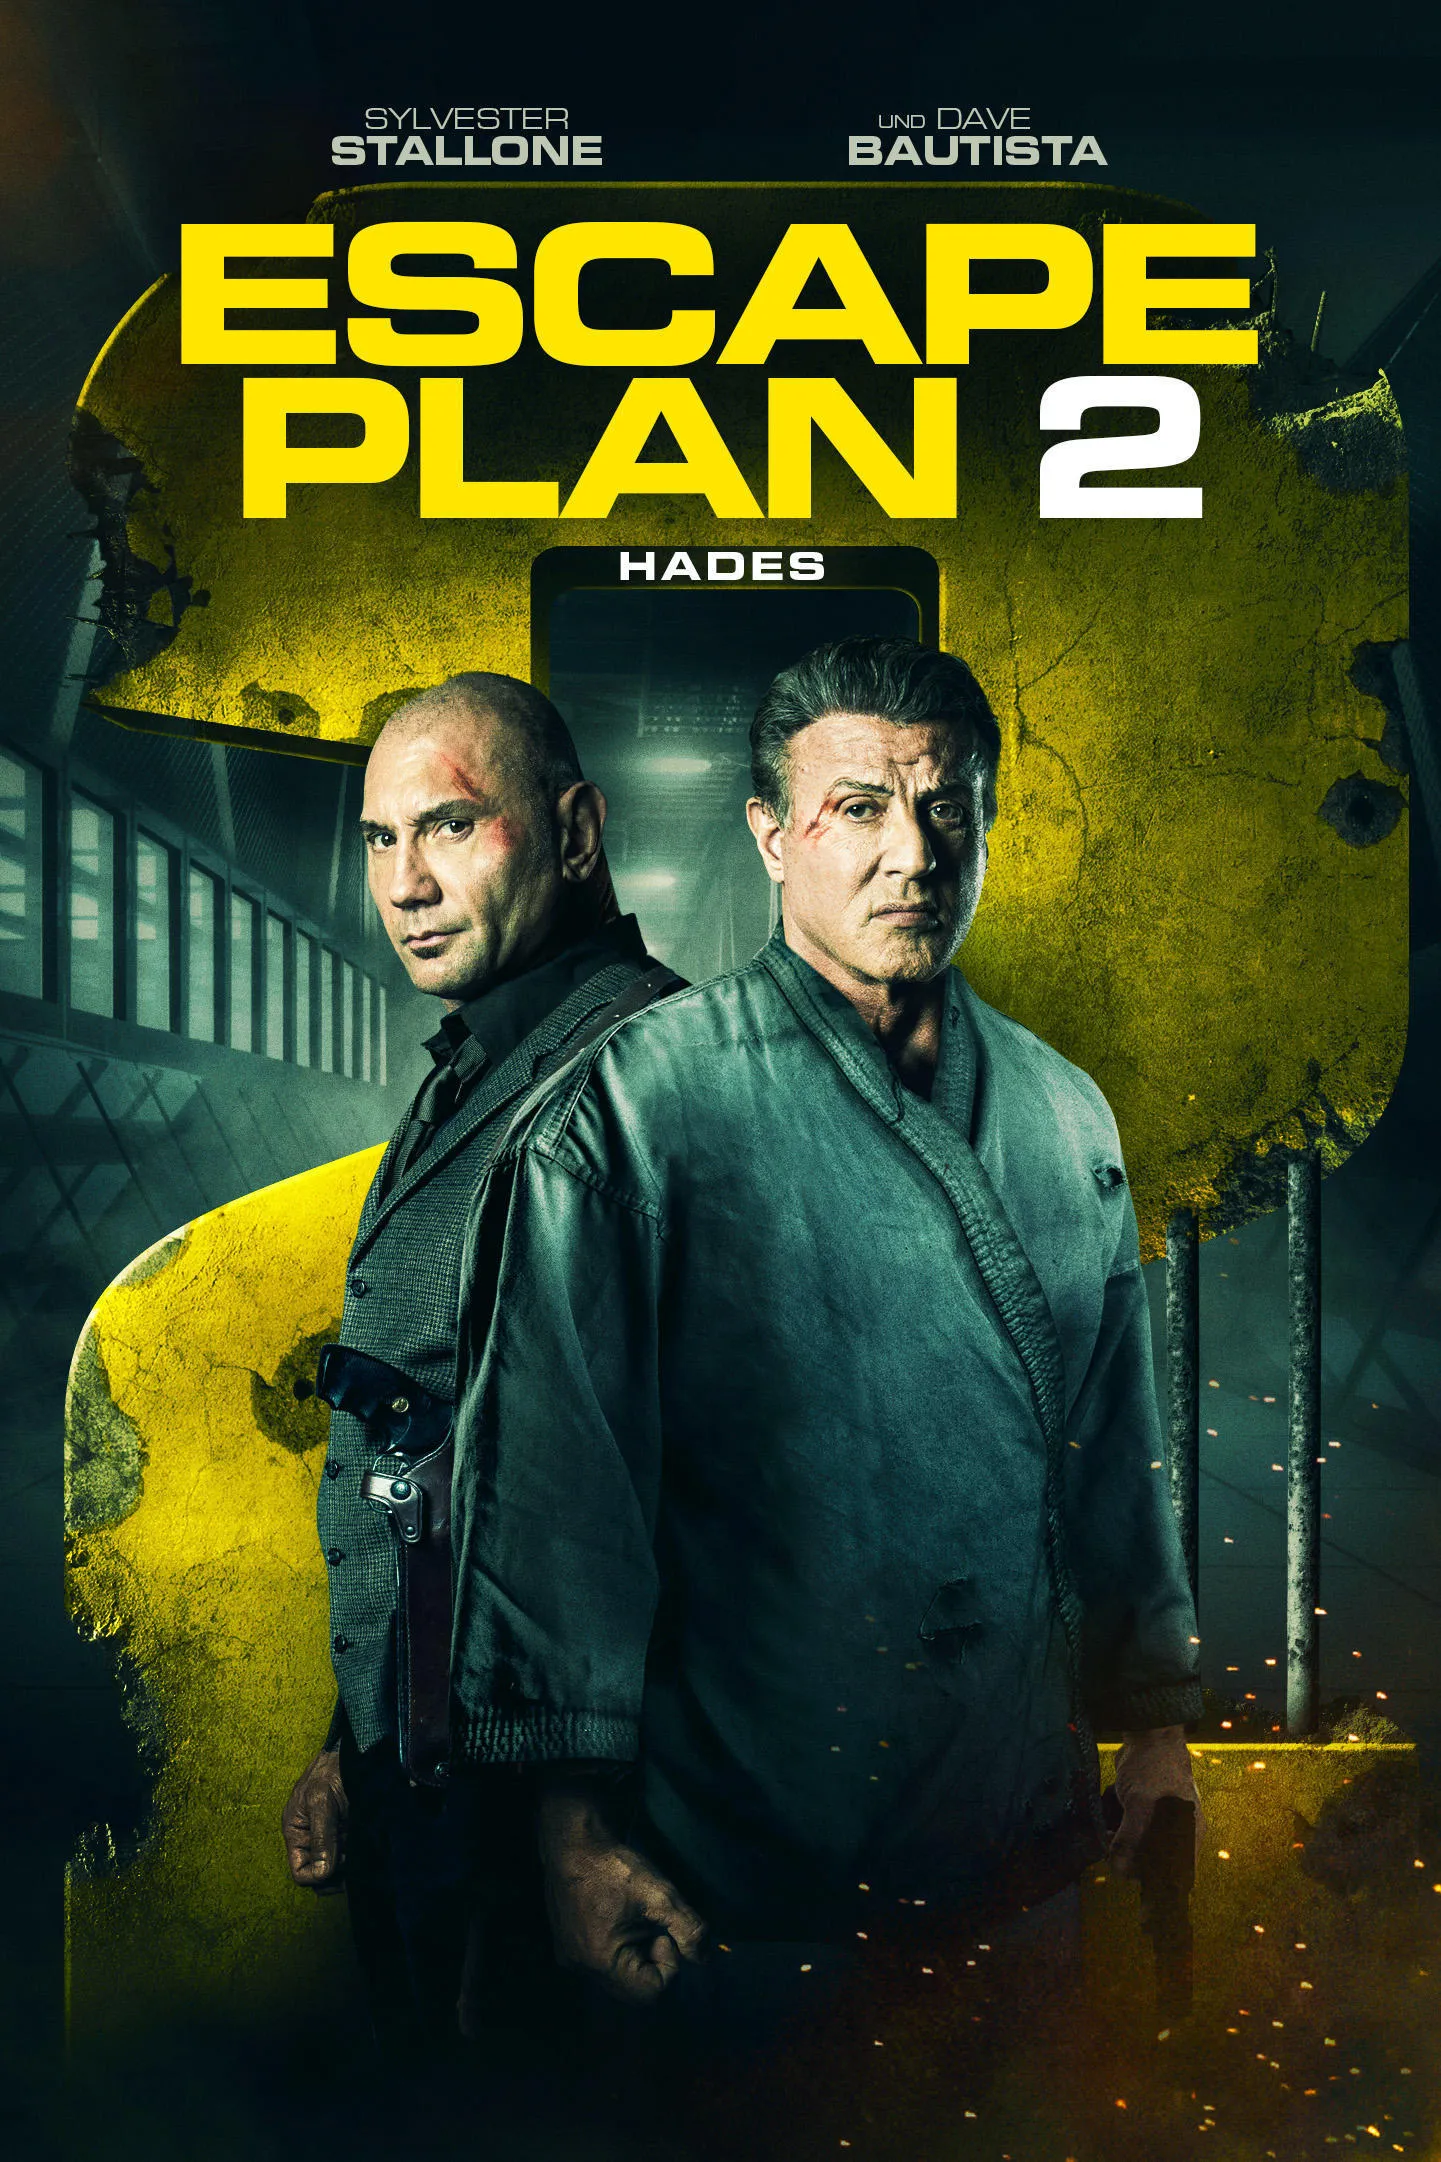 Trailer for Escape Plan 2: Hades